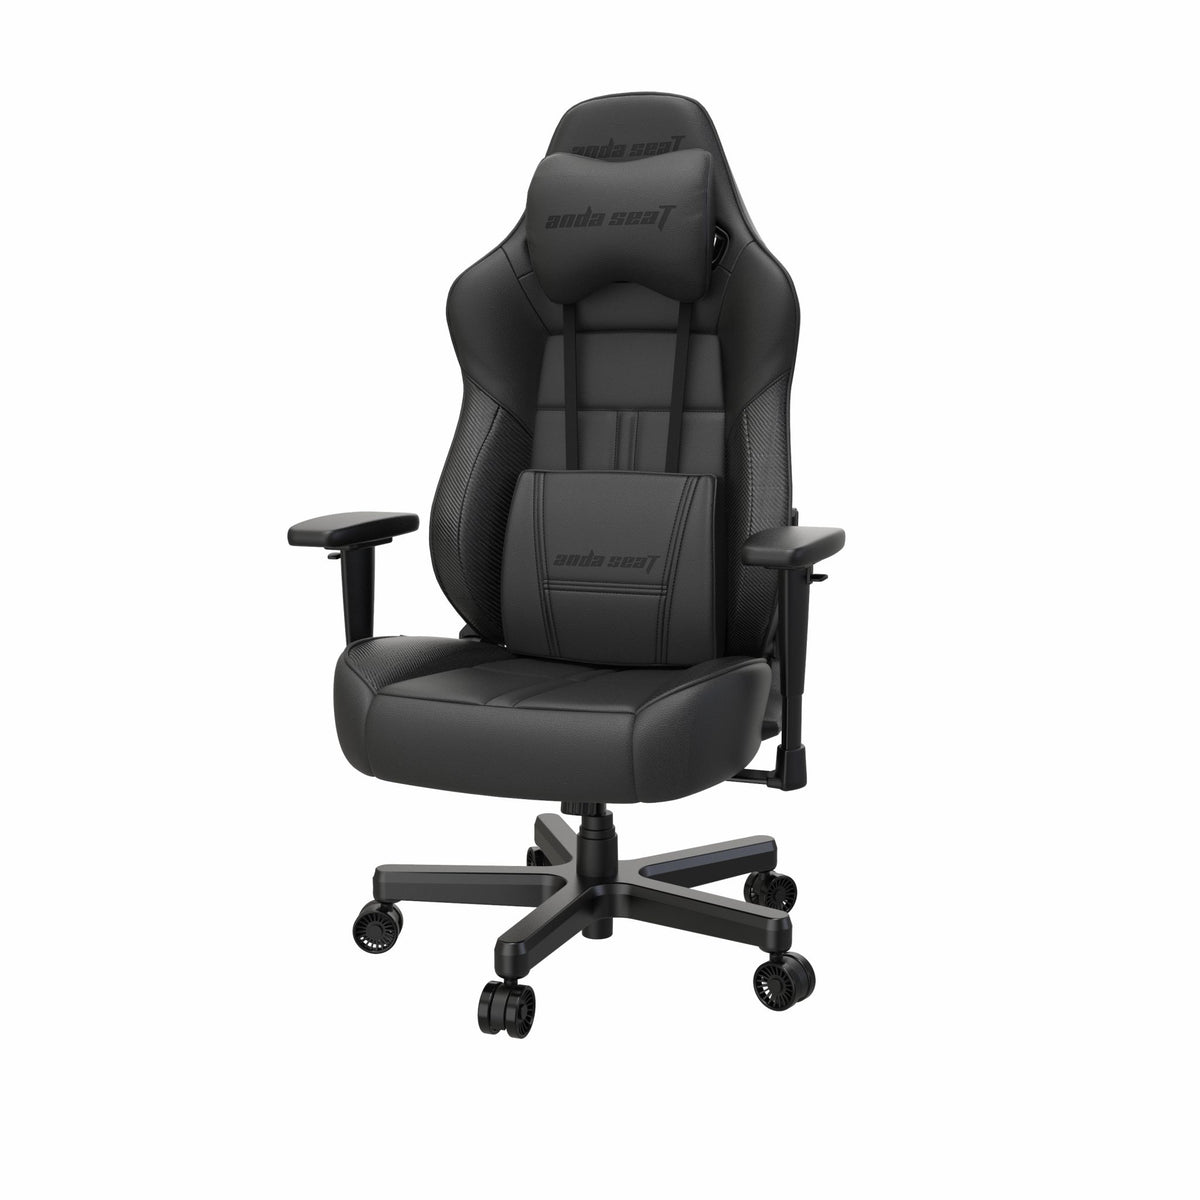 Anda Seat Dark Demon Dragon PC gaming chair Upholstered padded seat Black